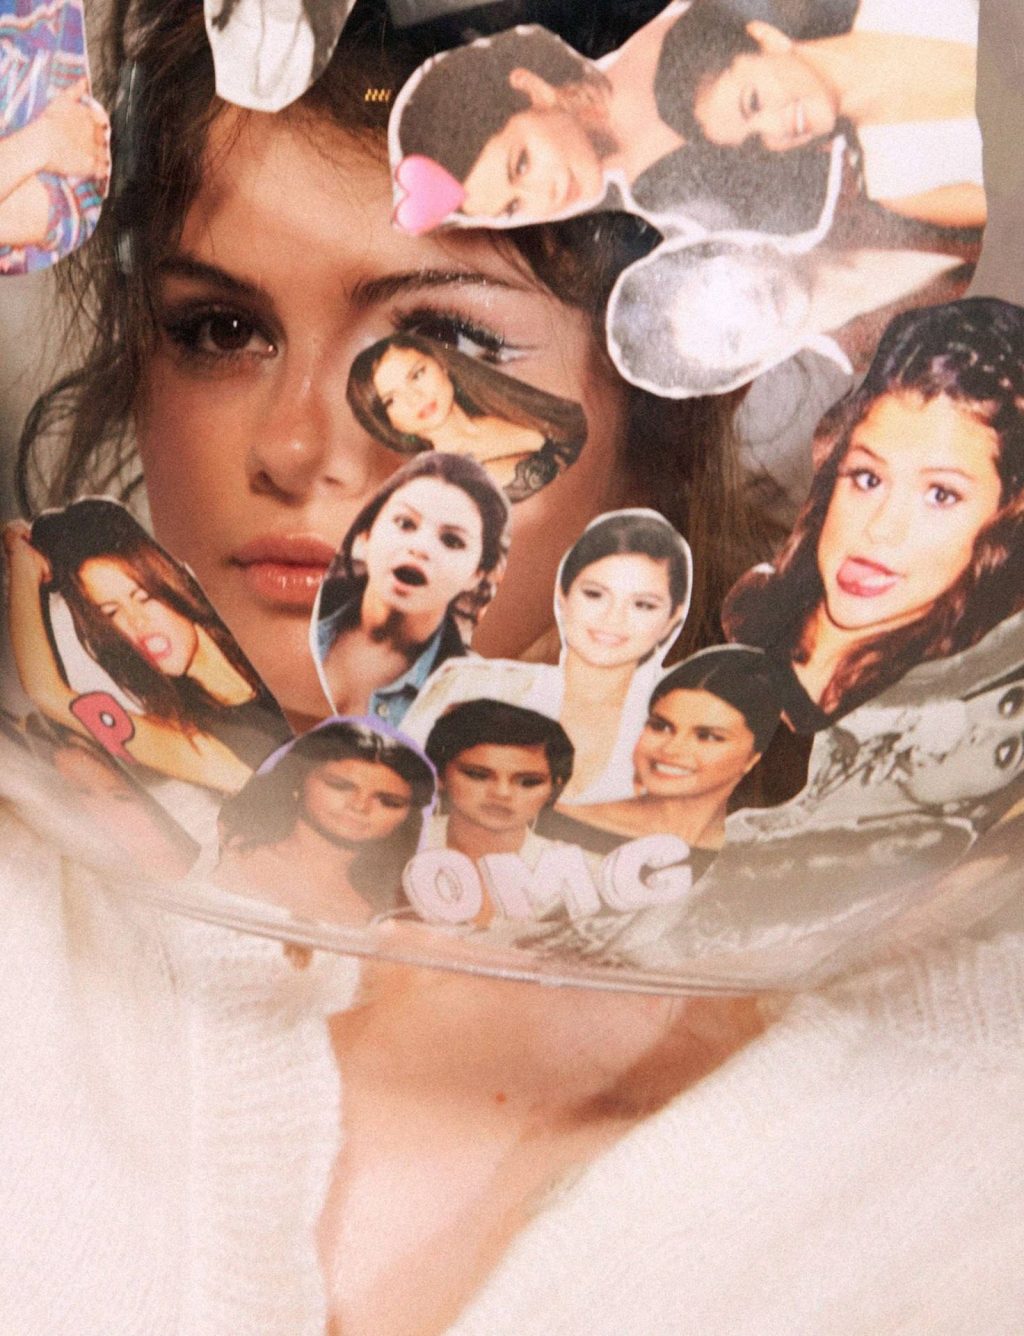 Selena Gomez Shows Her Body in a Photoshoot for Dazed Magazine (35 Photos)